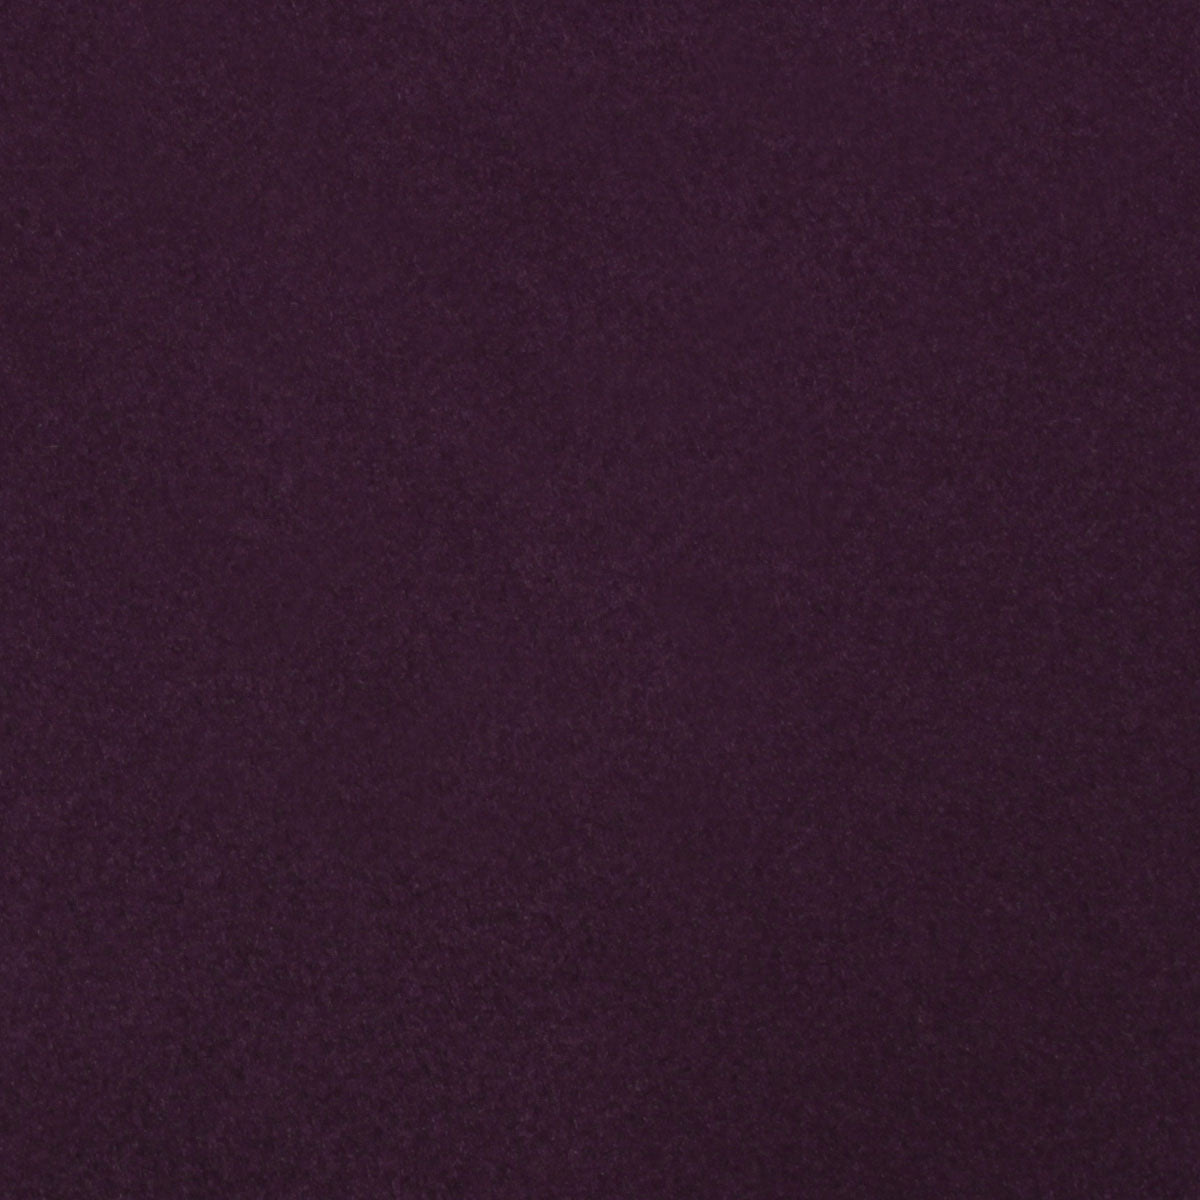 Plum Purple Velvet Fabric Self Bow Tie